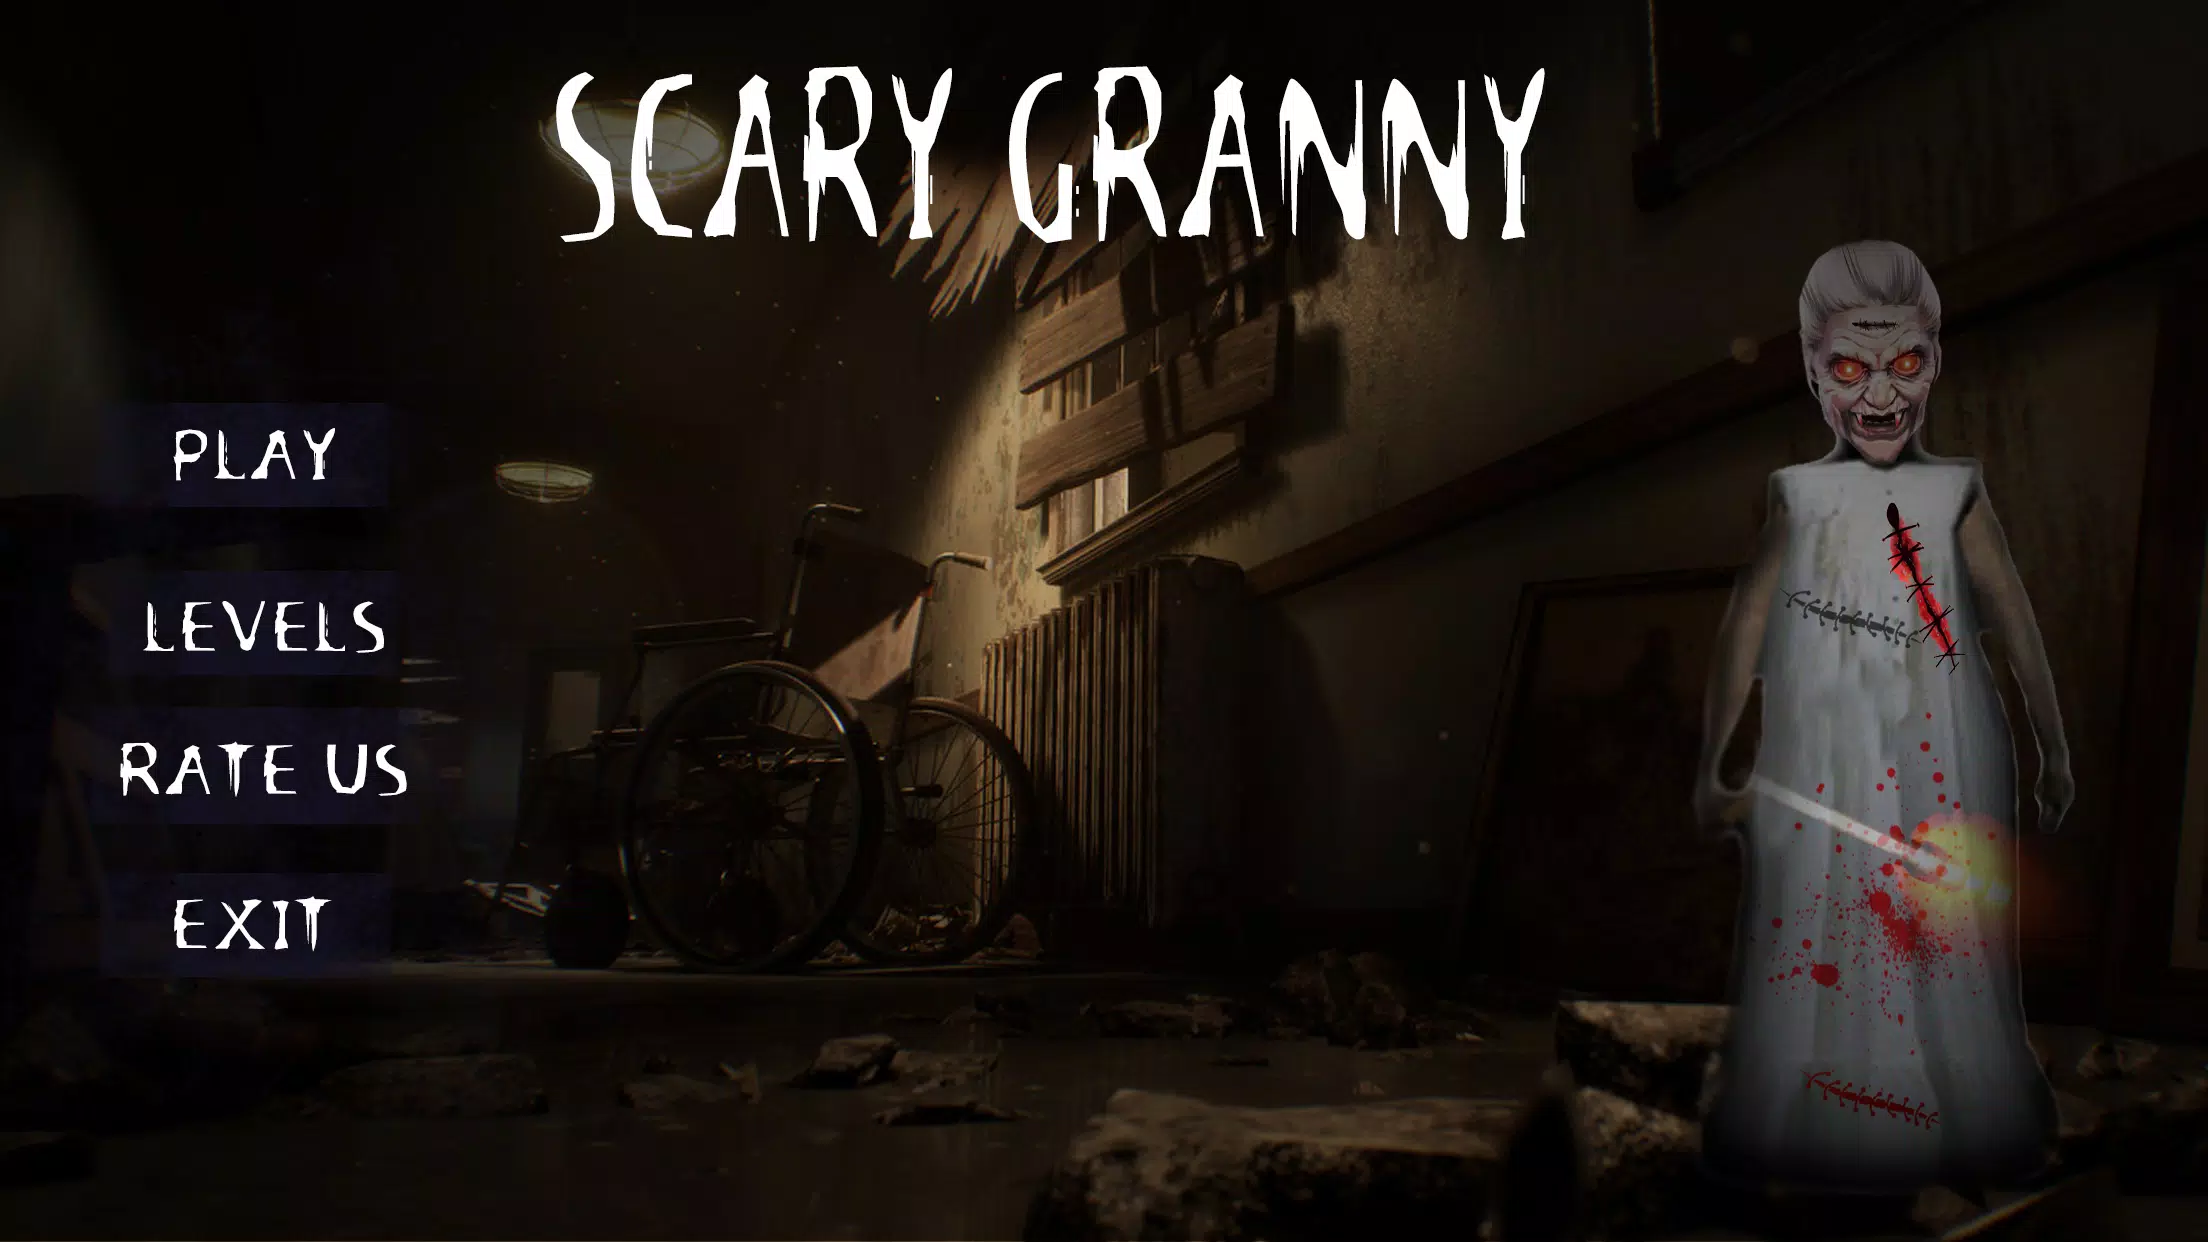 Horror granny game